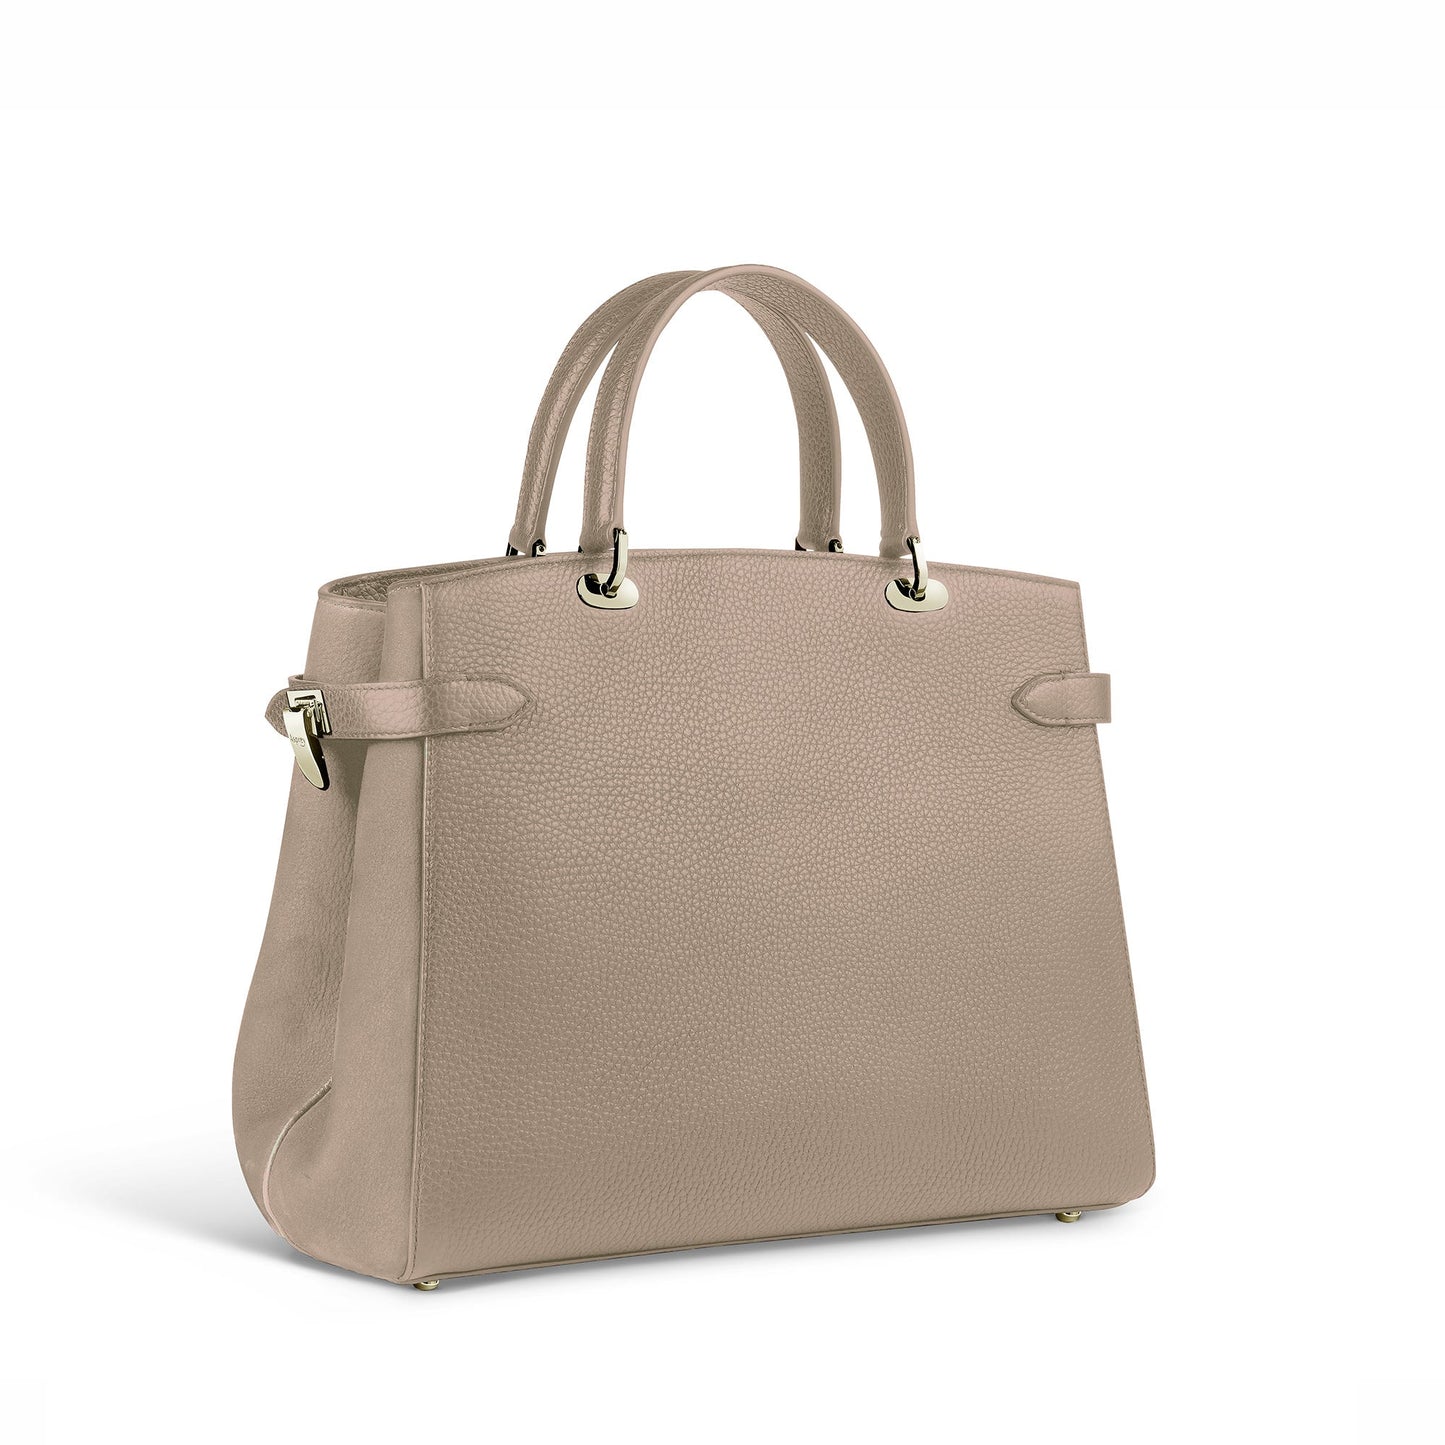 Taylor Large Handbag in Soft Grain Leather